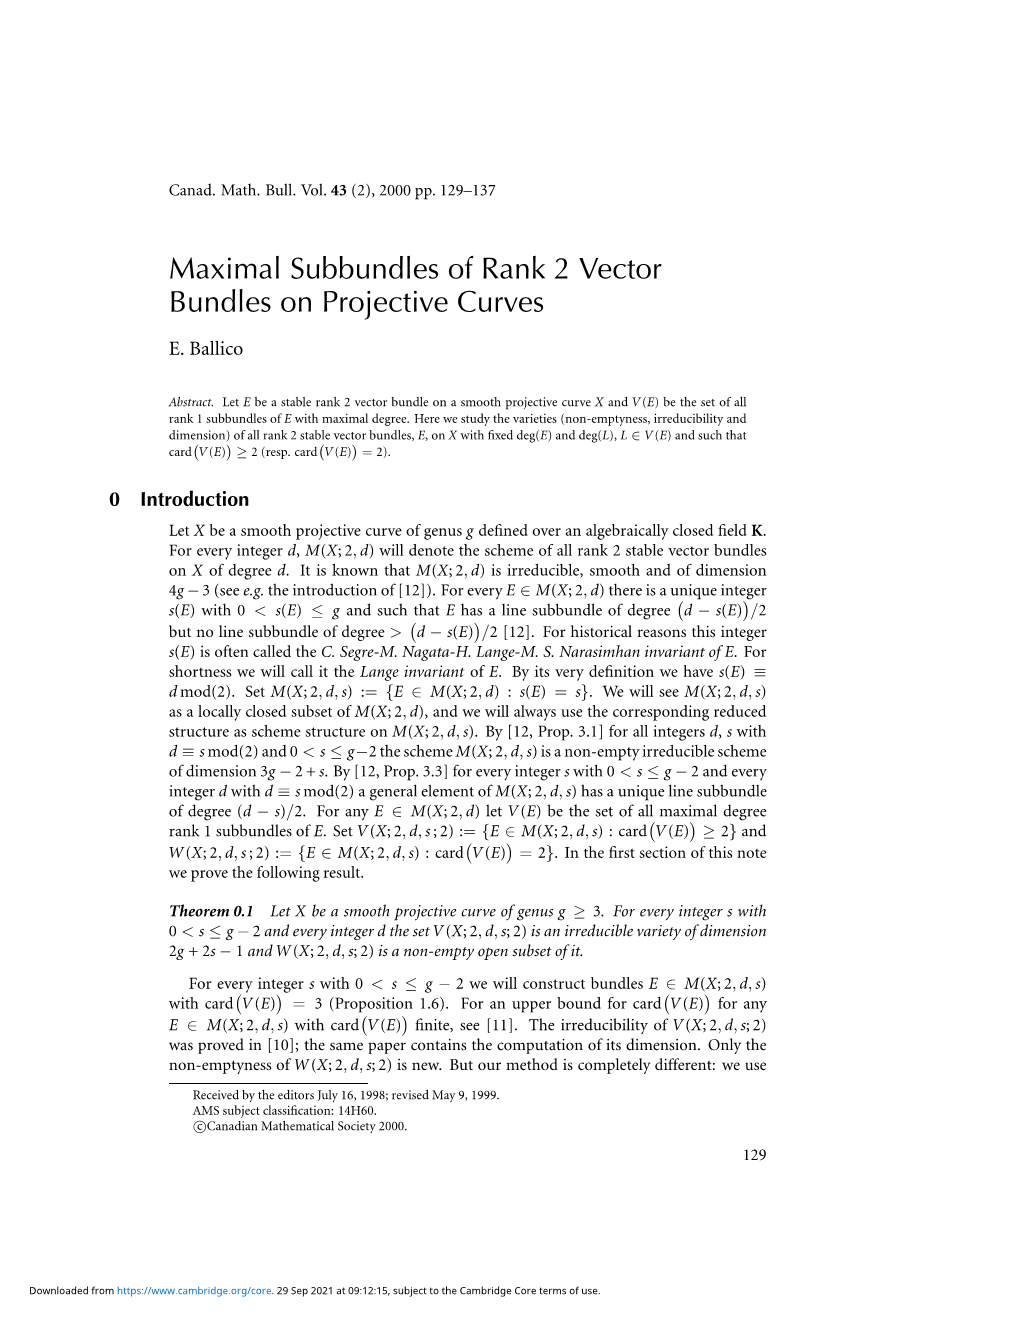 Maximal Subbundles of Rank 2 Vector Bundles on Projective Curves